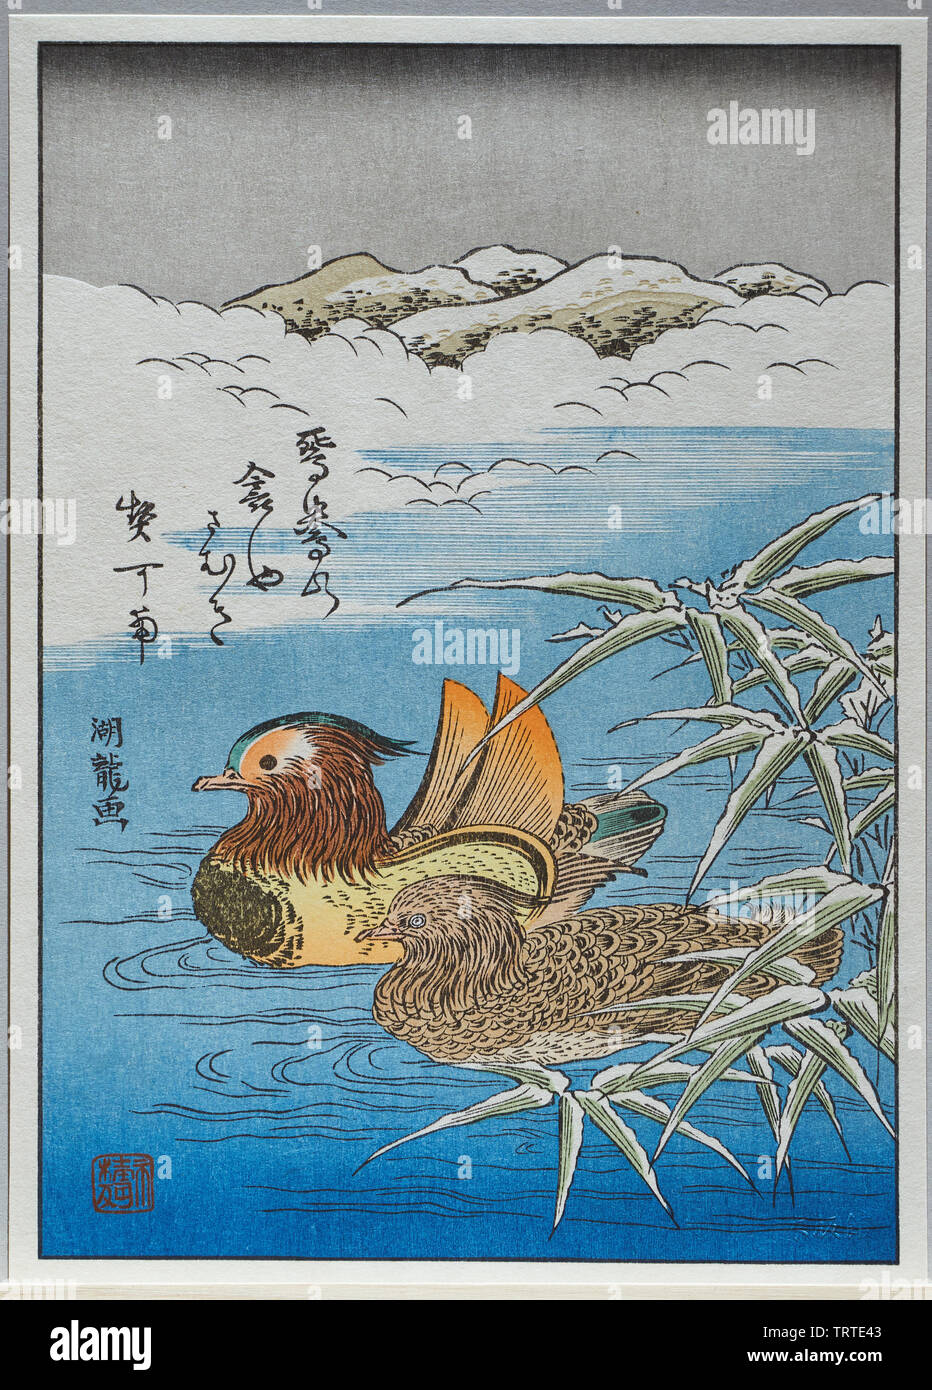 Modern printing of Mandarin Ducks Japanese ukiyoe woodblock print, by Isoda Koryusai, carved by David Bull, and printed by Mokuhankan staff. Stock Photo